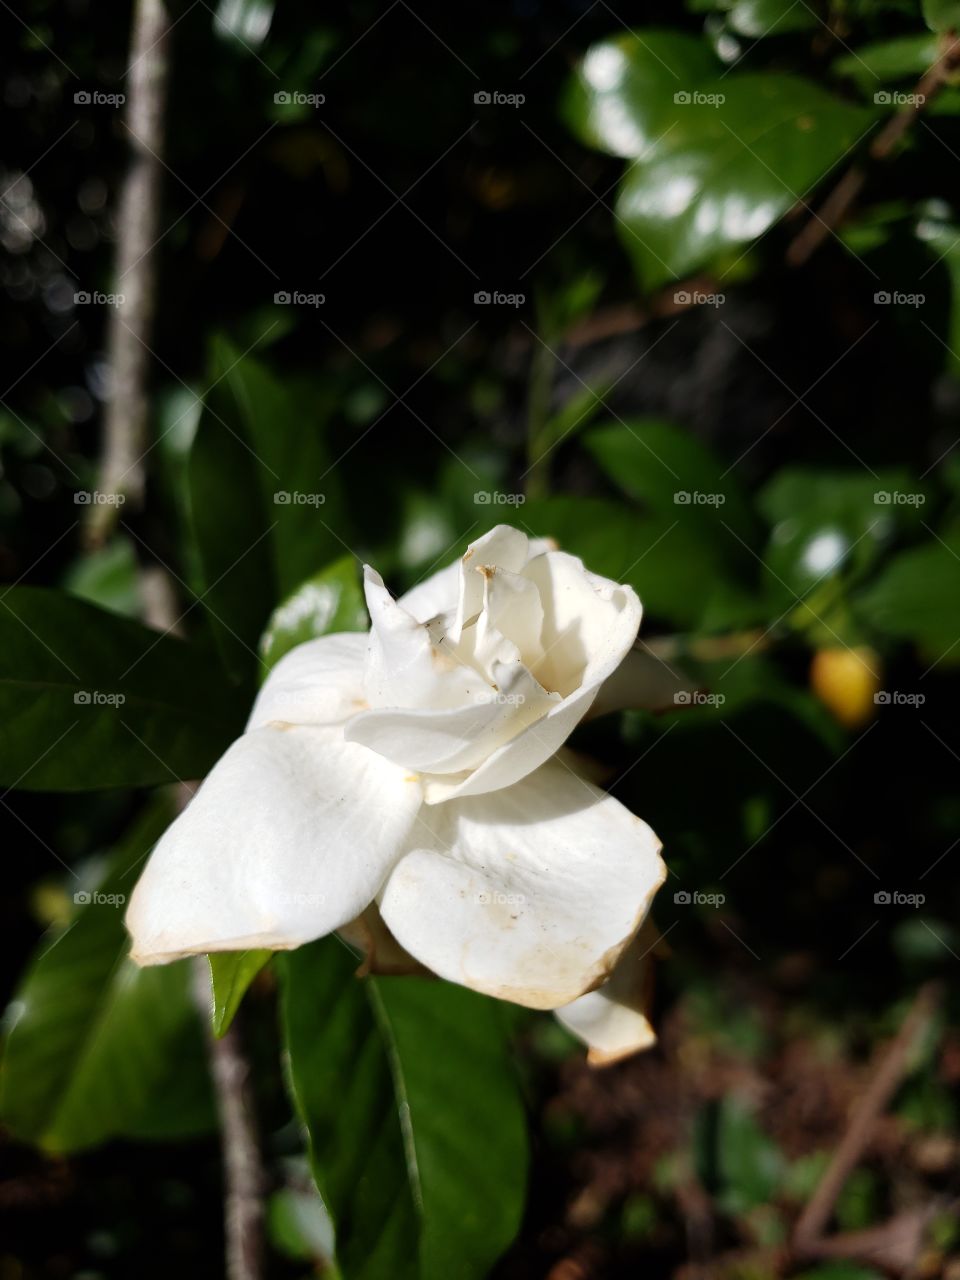 Last gardenia bloom